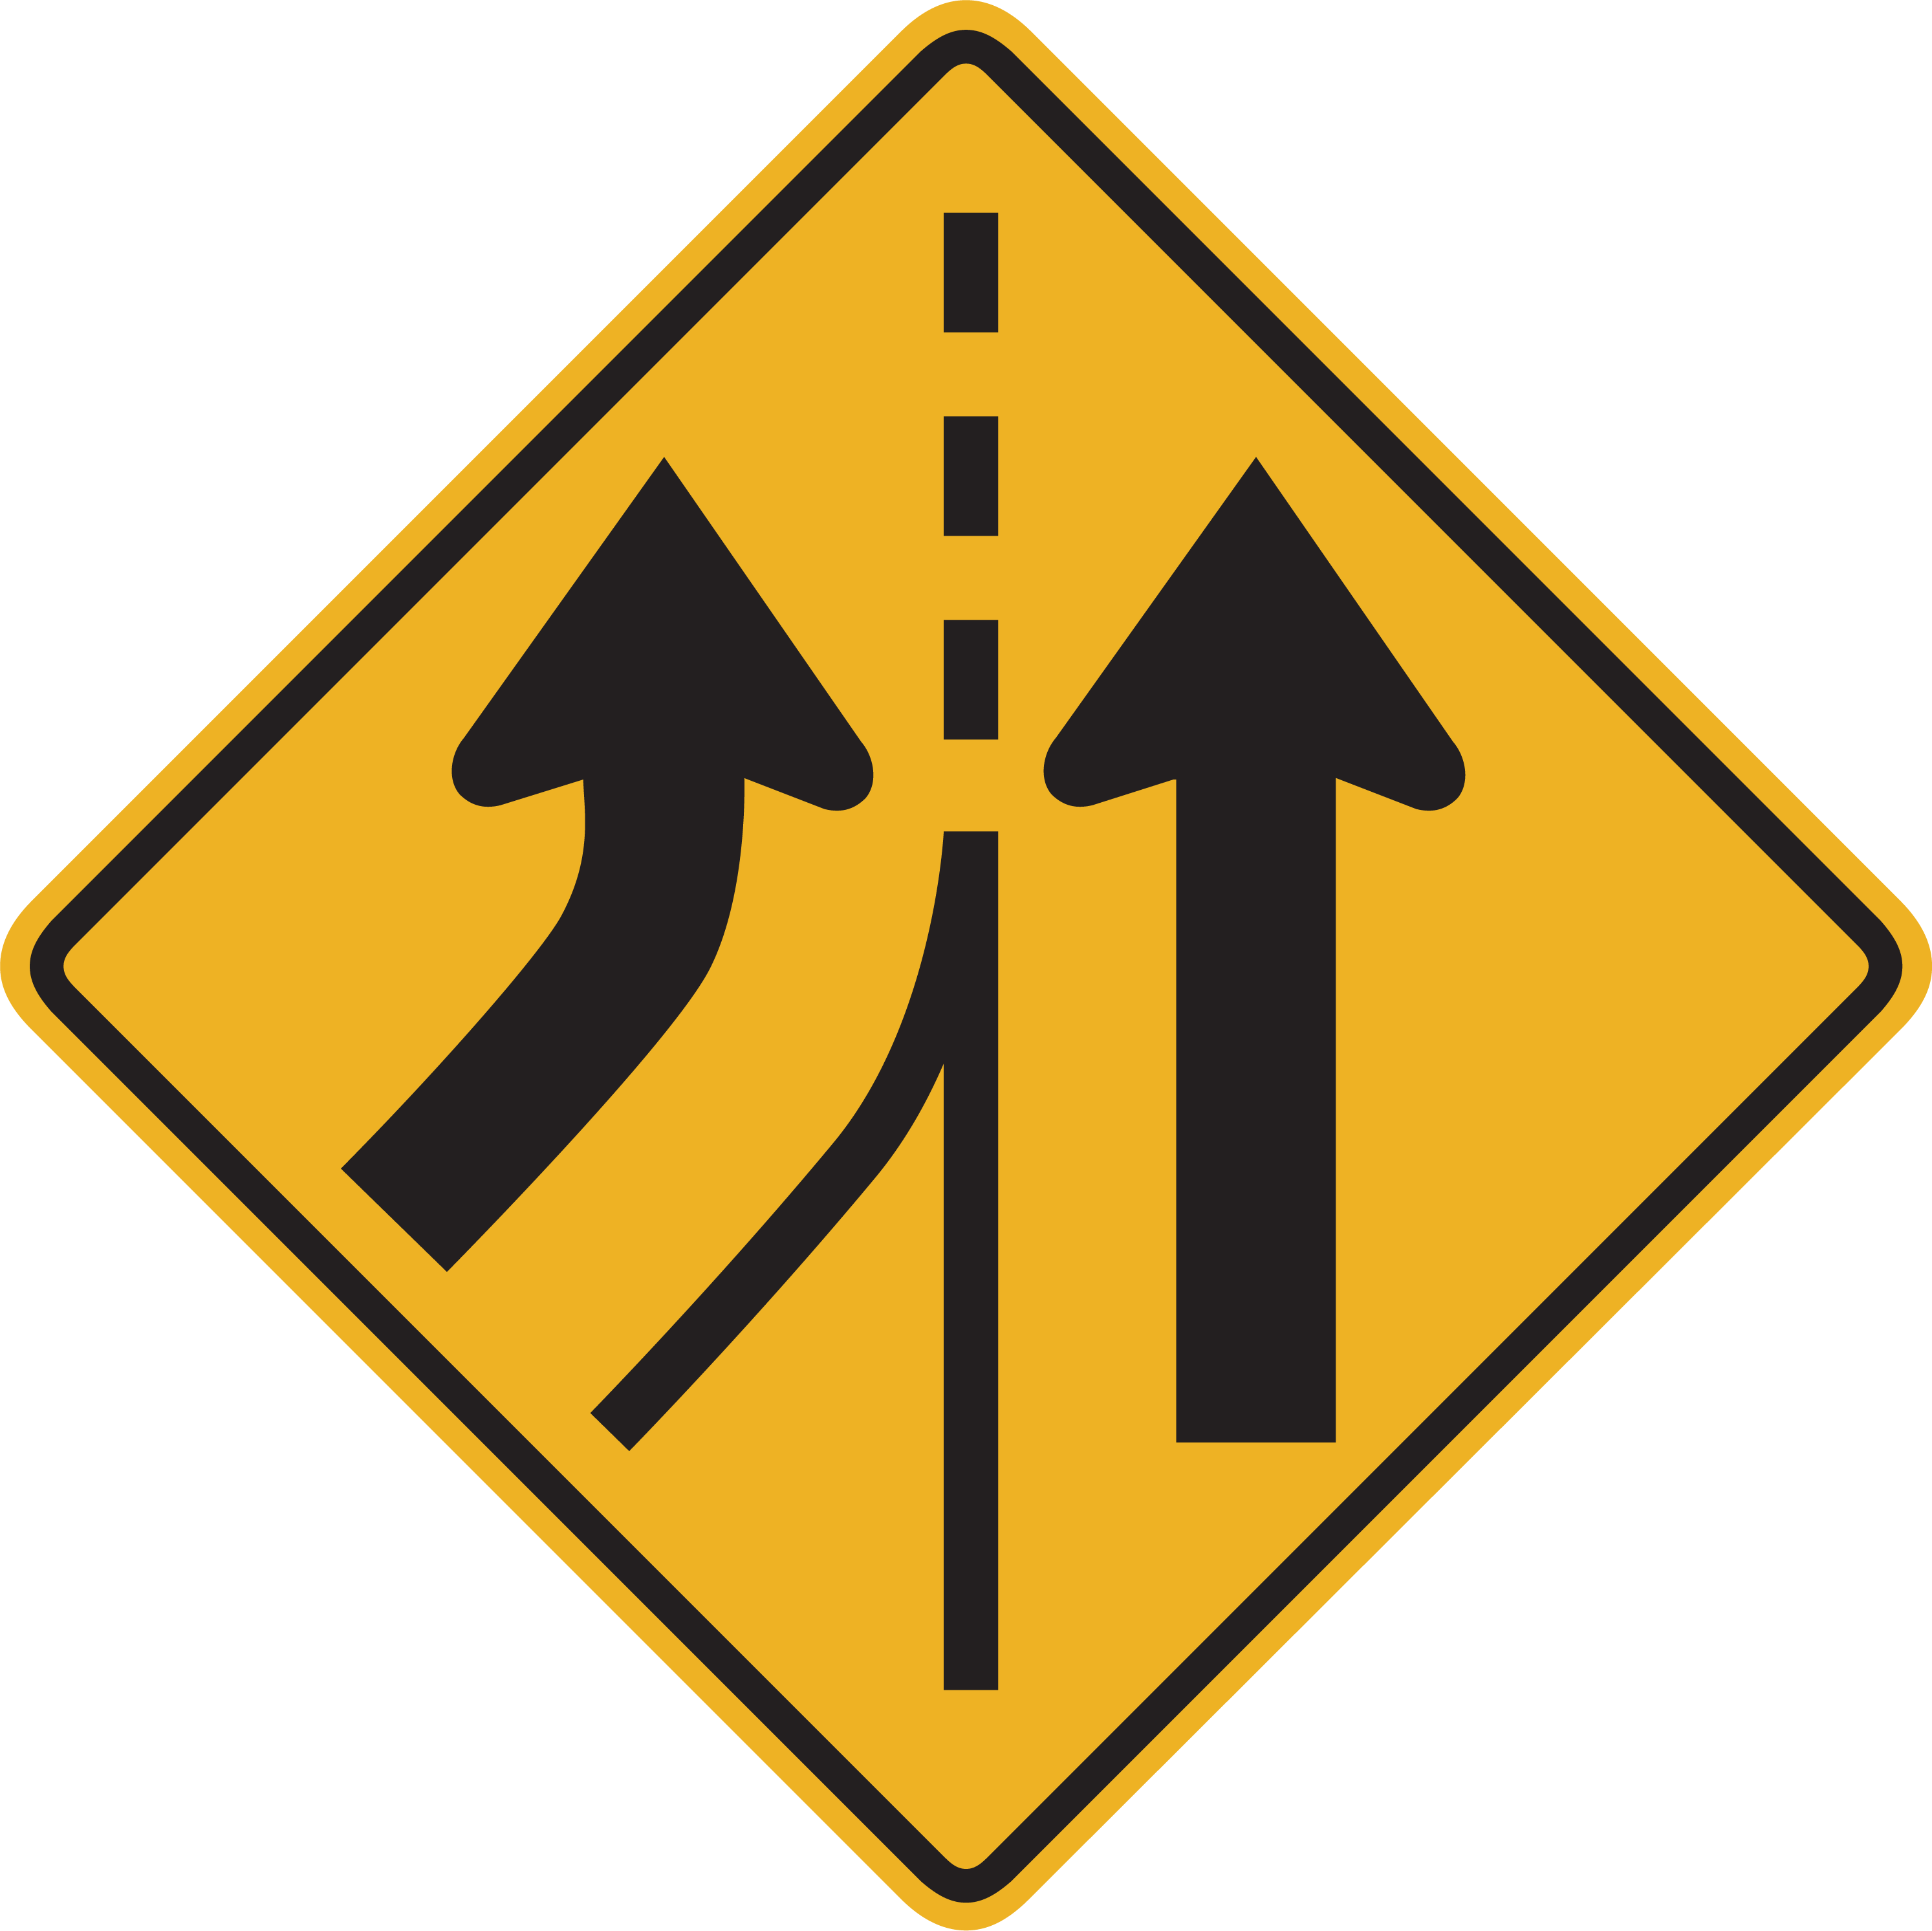 road sign showing merging lanes